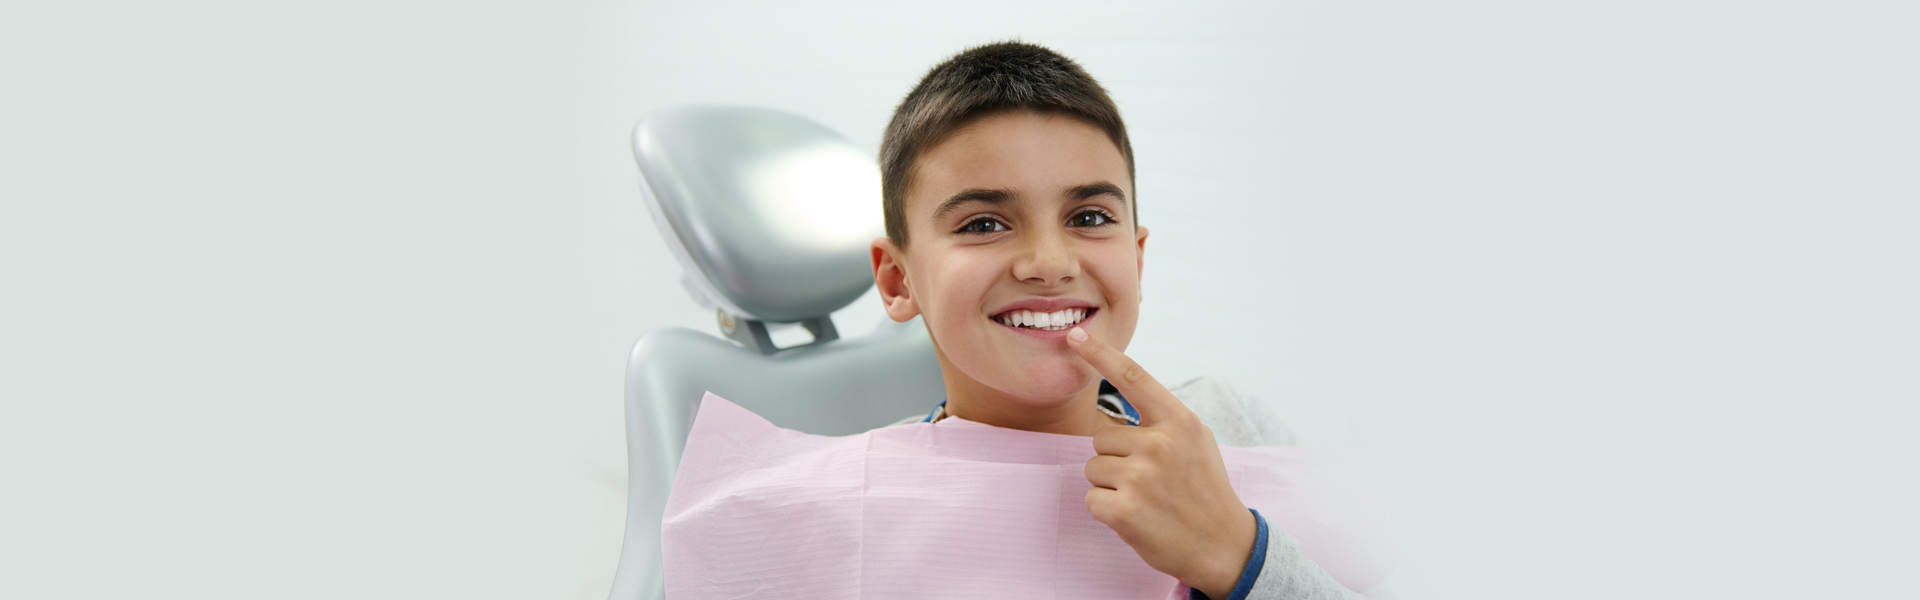 When Do You Need Dental Sealants? What Do Dental Sealants Cost?